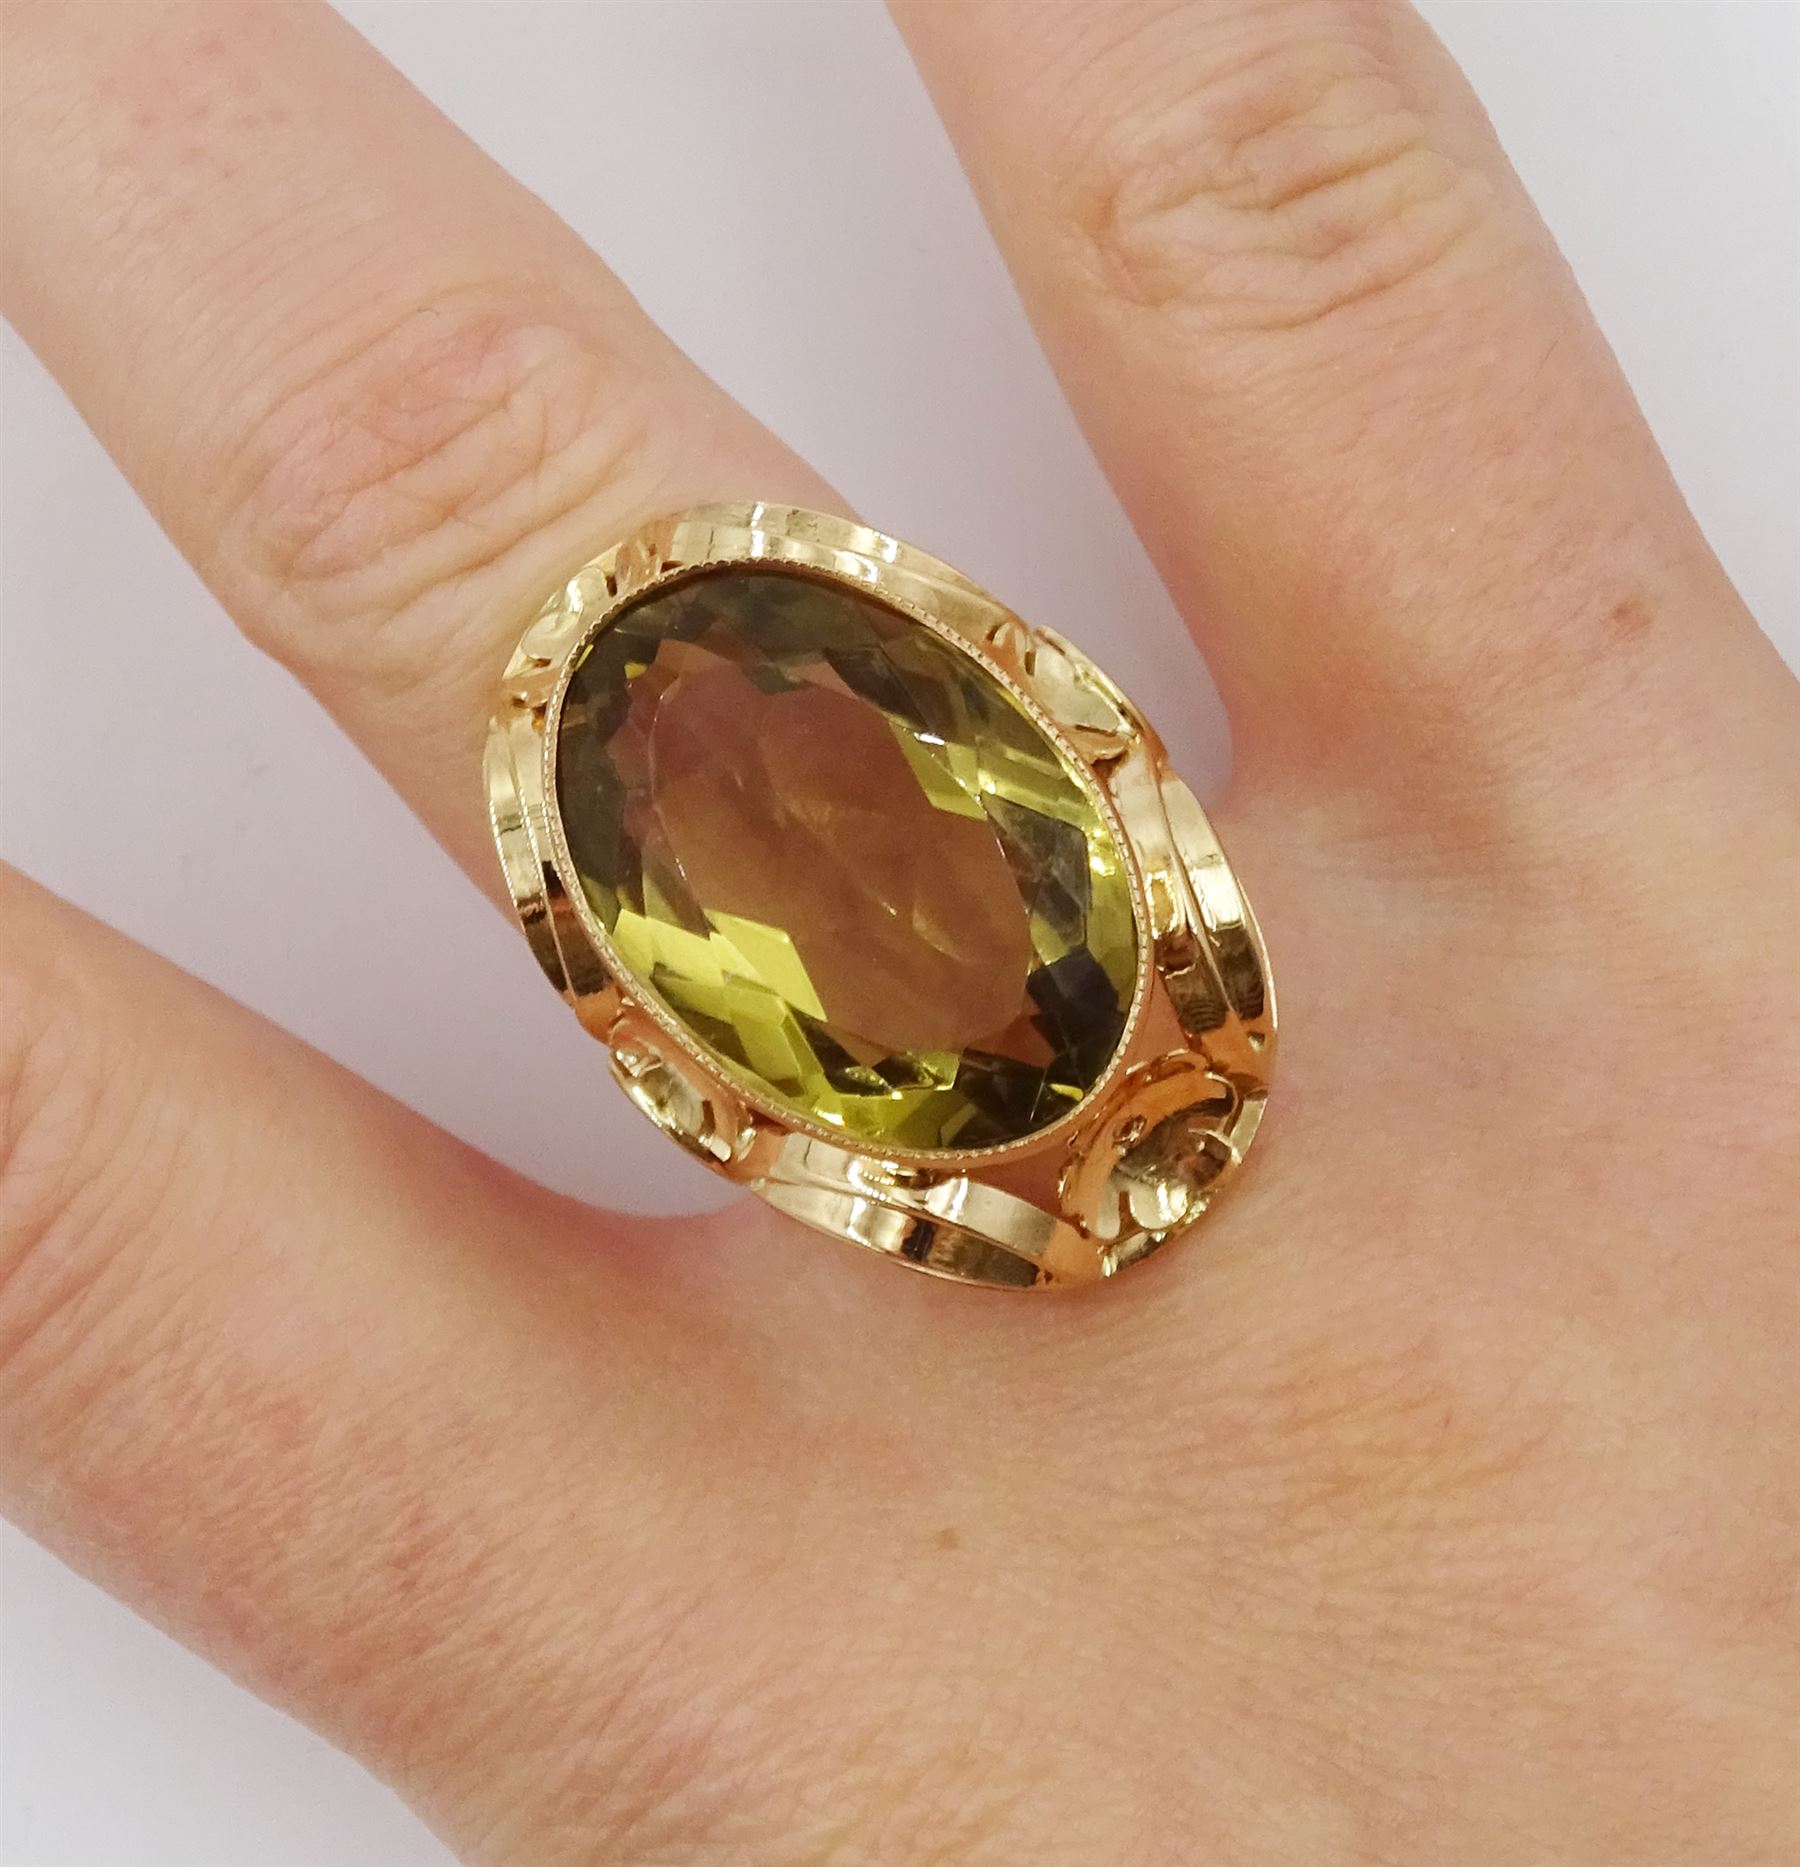 14ct rose gold large single stone oval citrine ring - Image 2 of 4